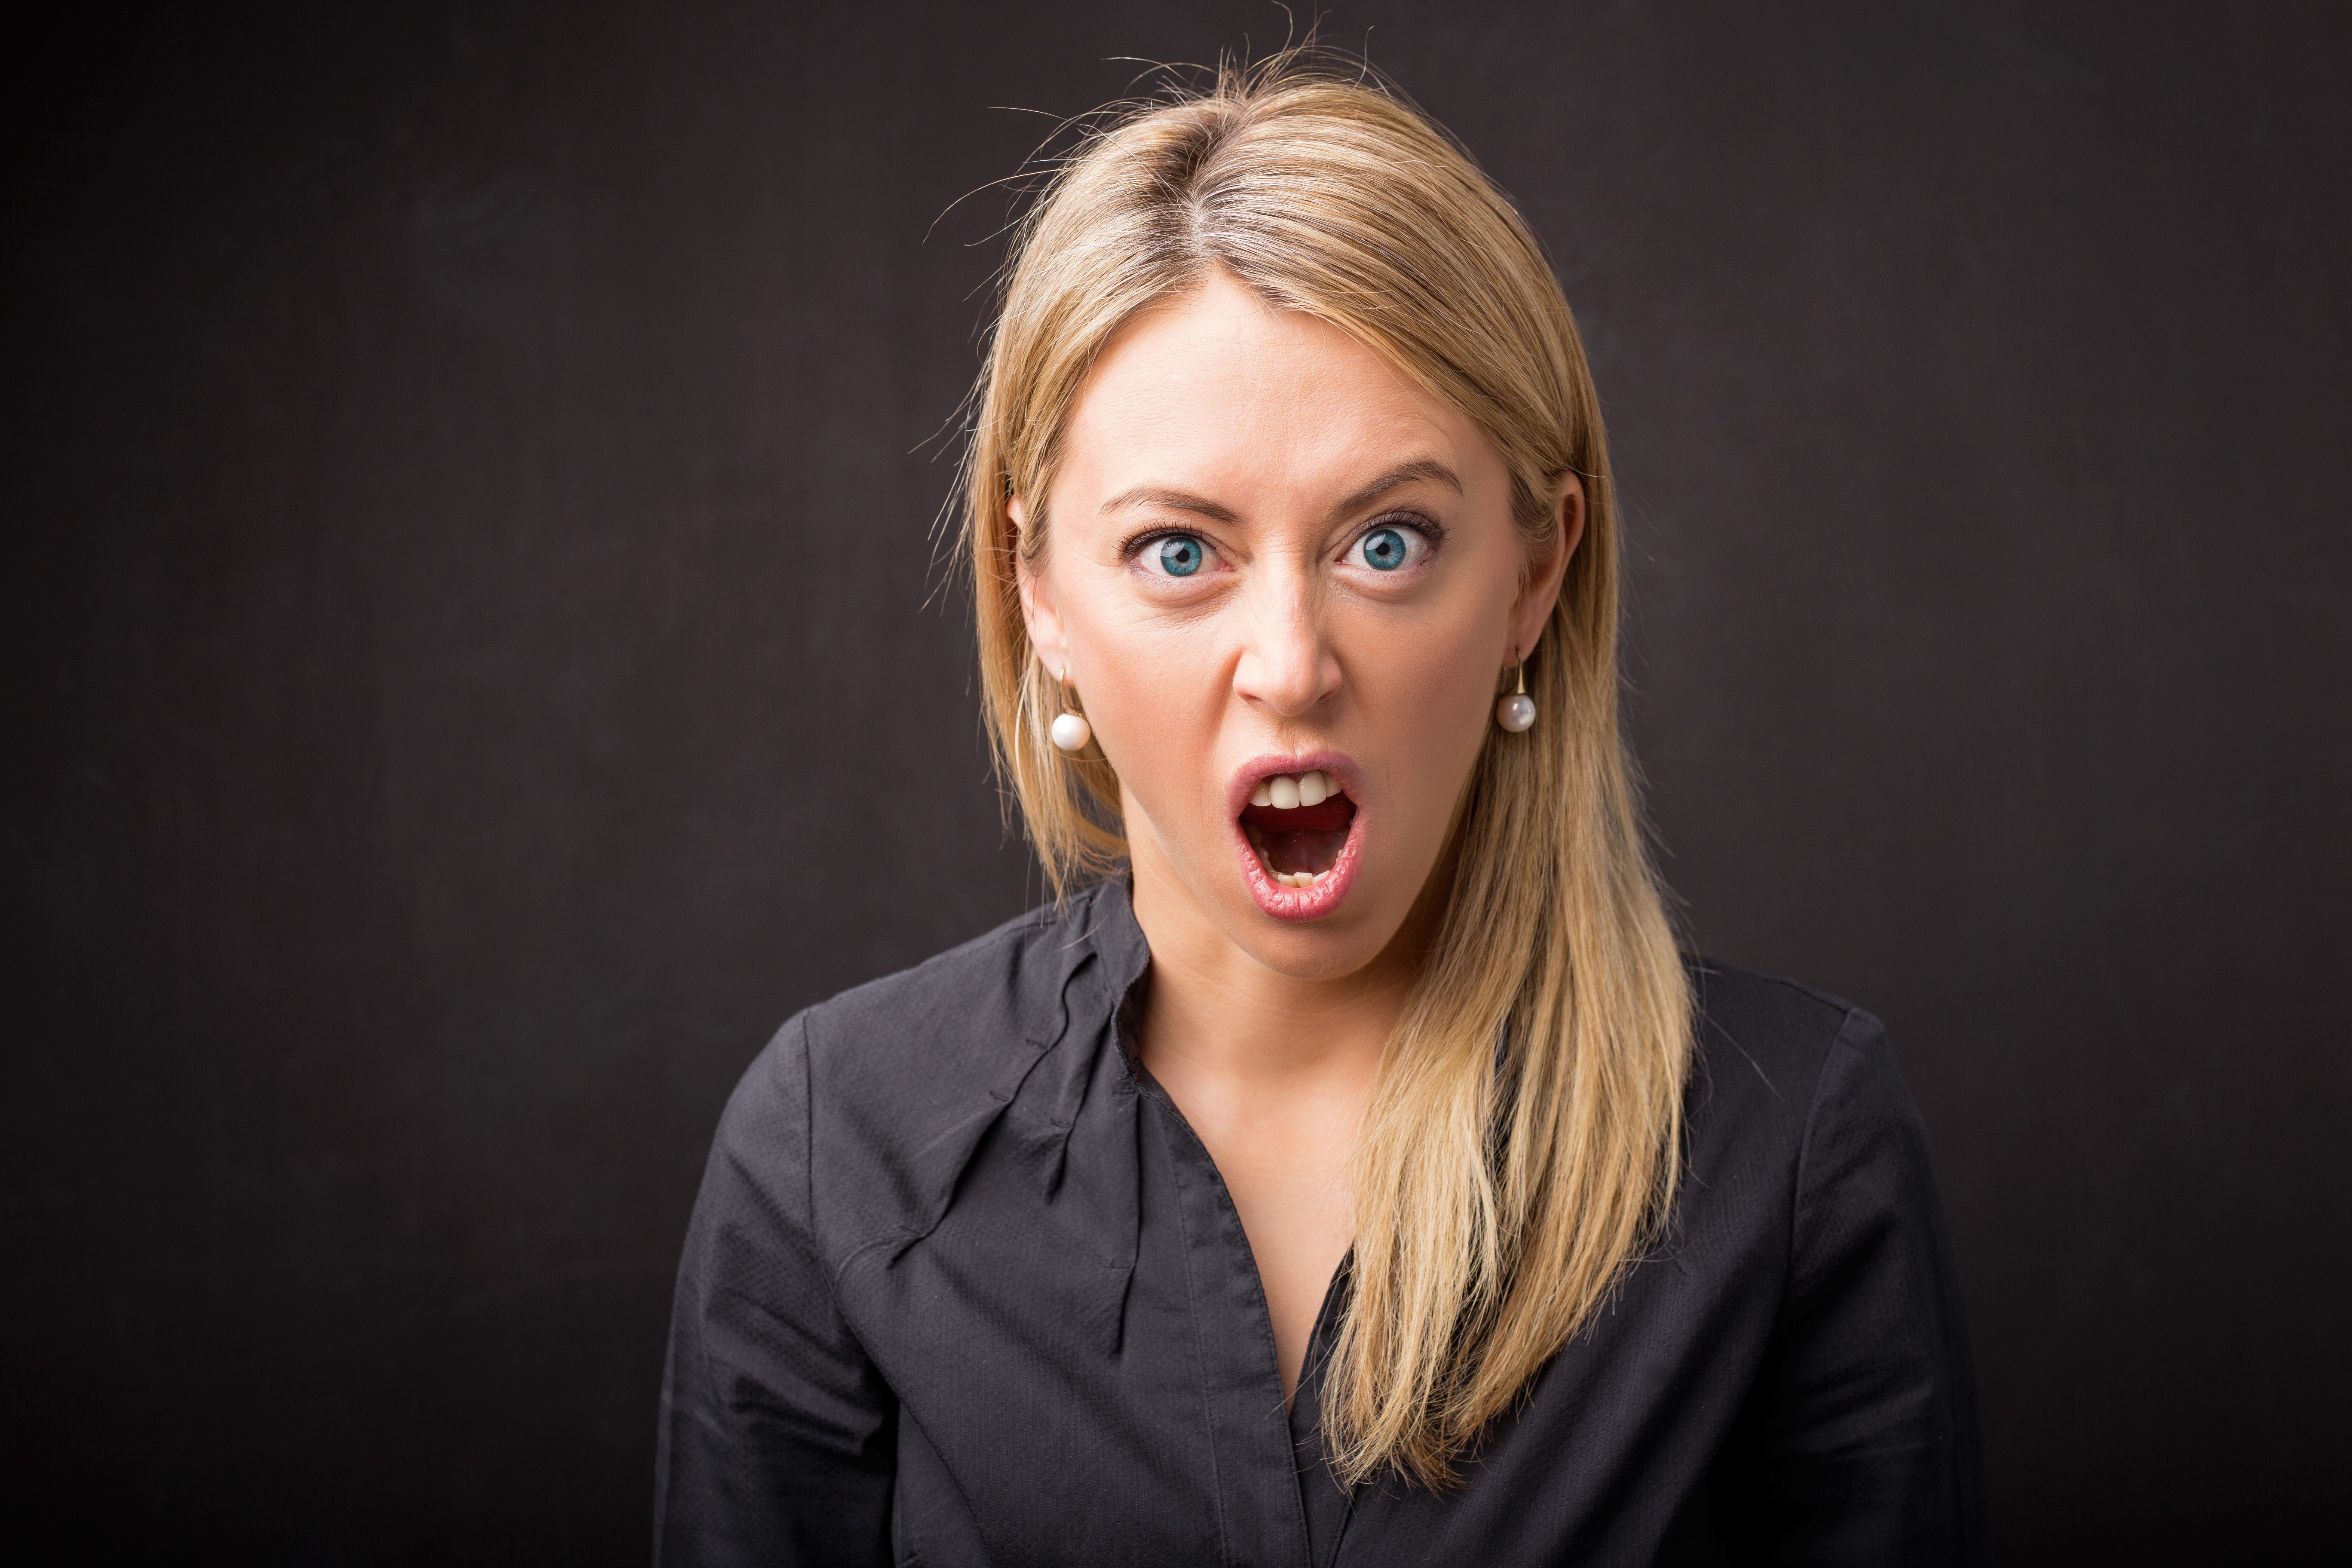 An angry woman shouting | Source: Shutterstock